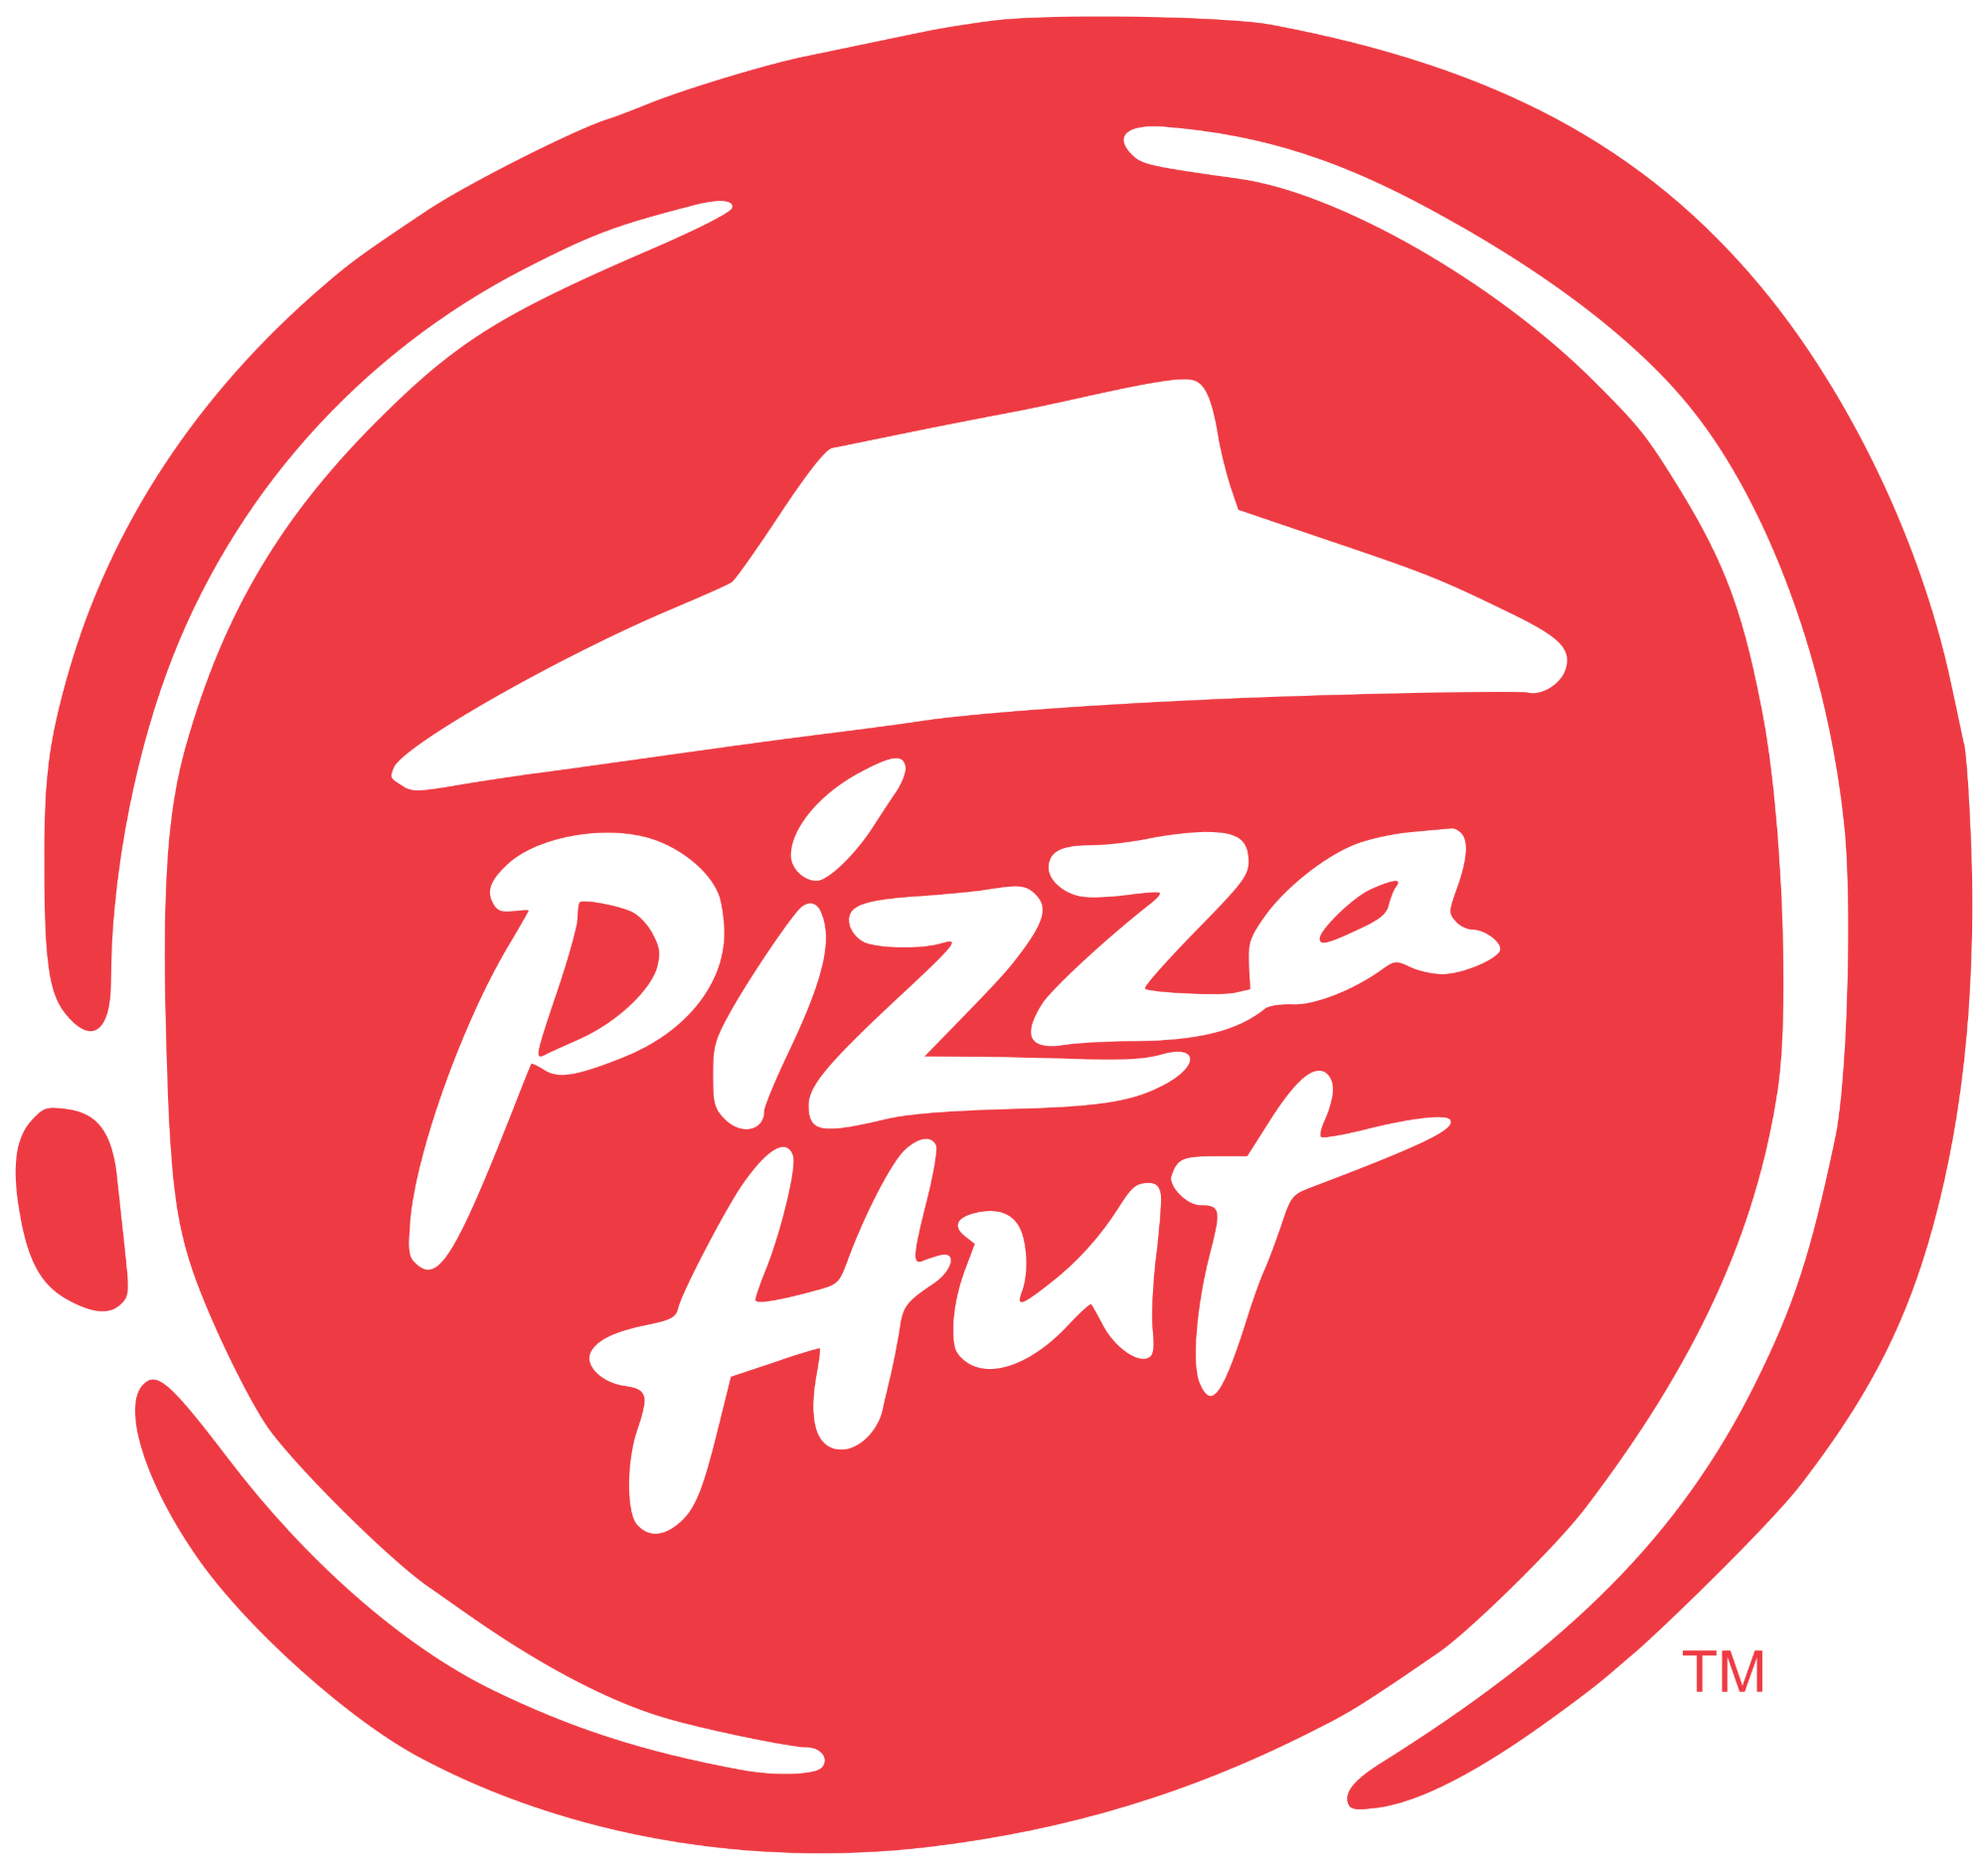 Pizza Hut Logo Png - Pizza Hu